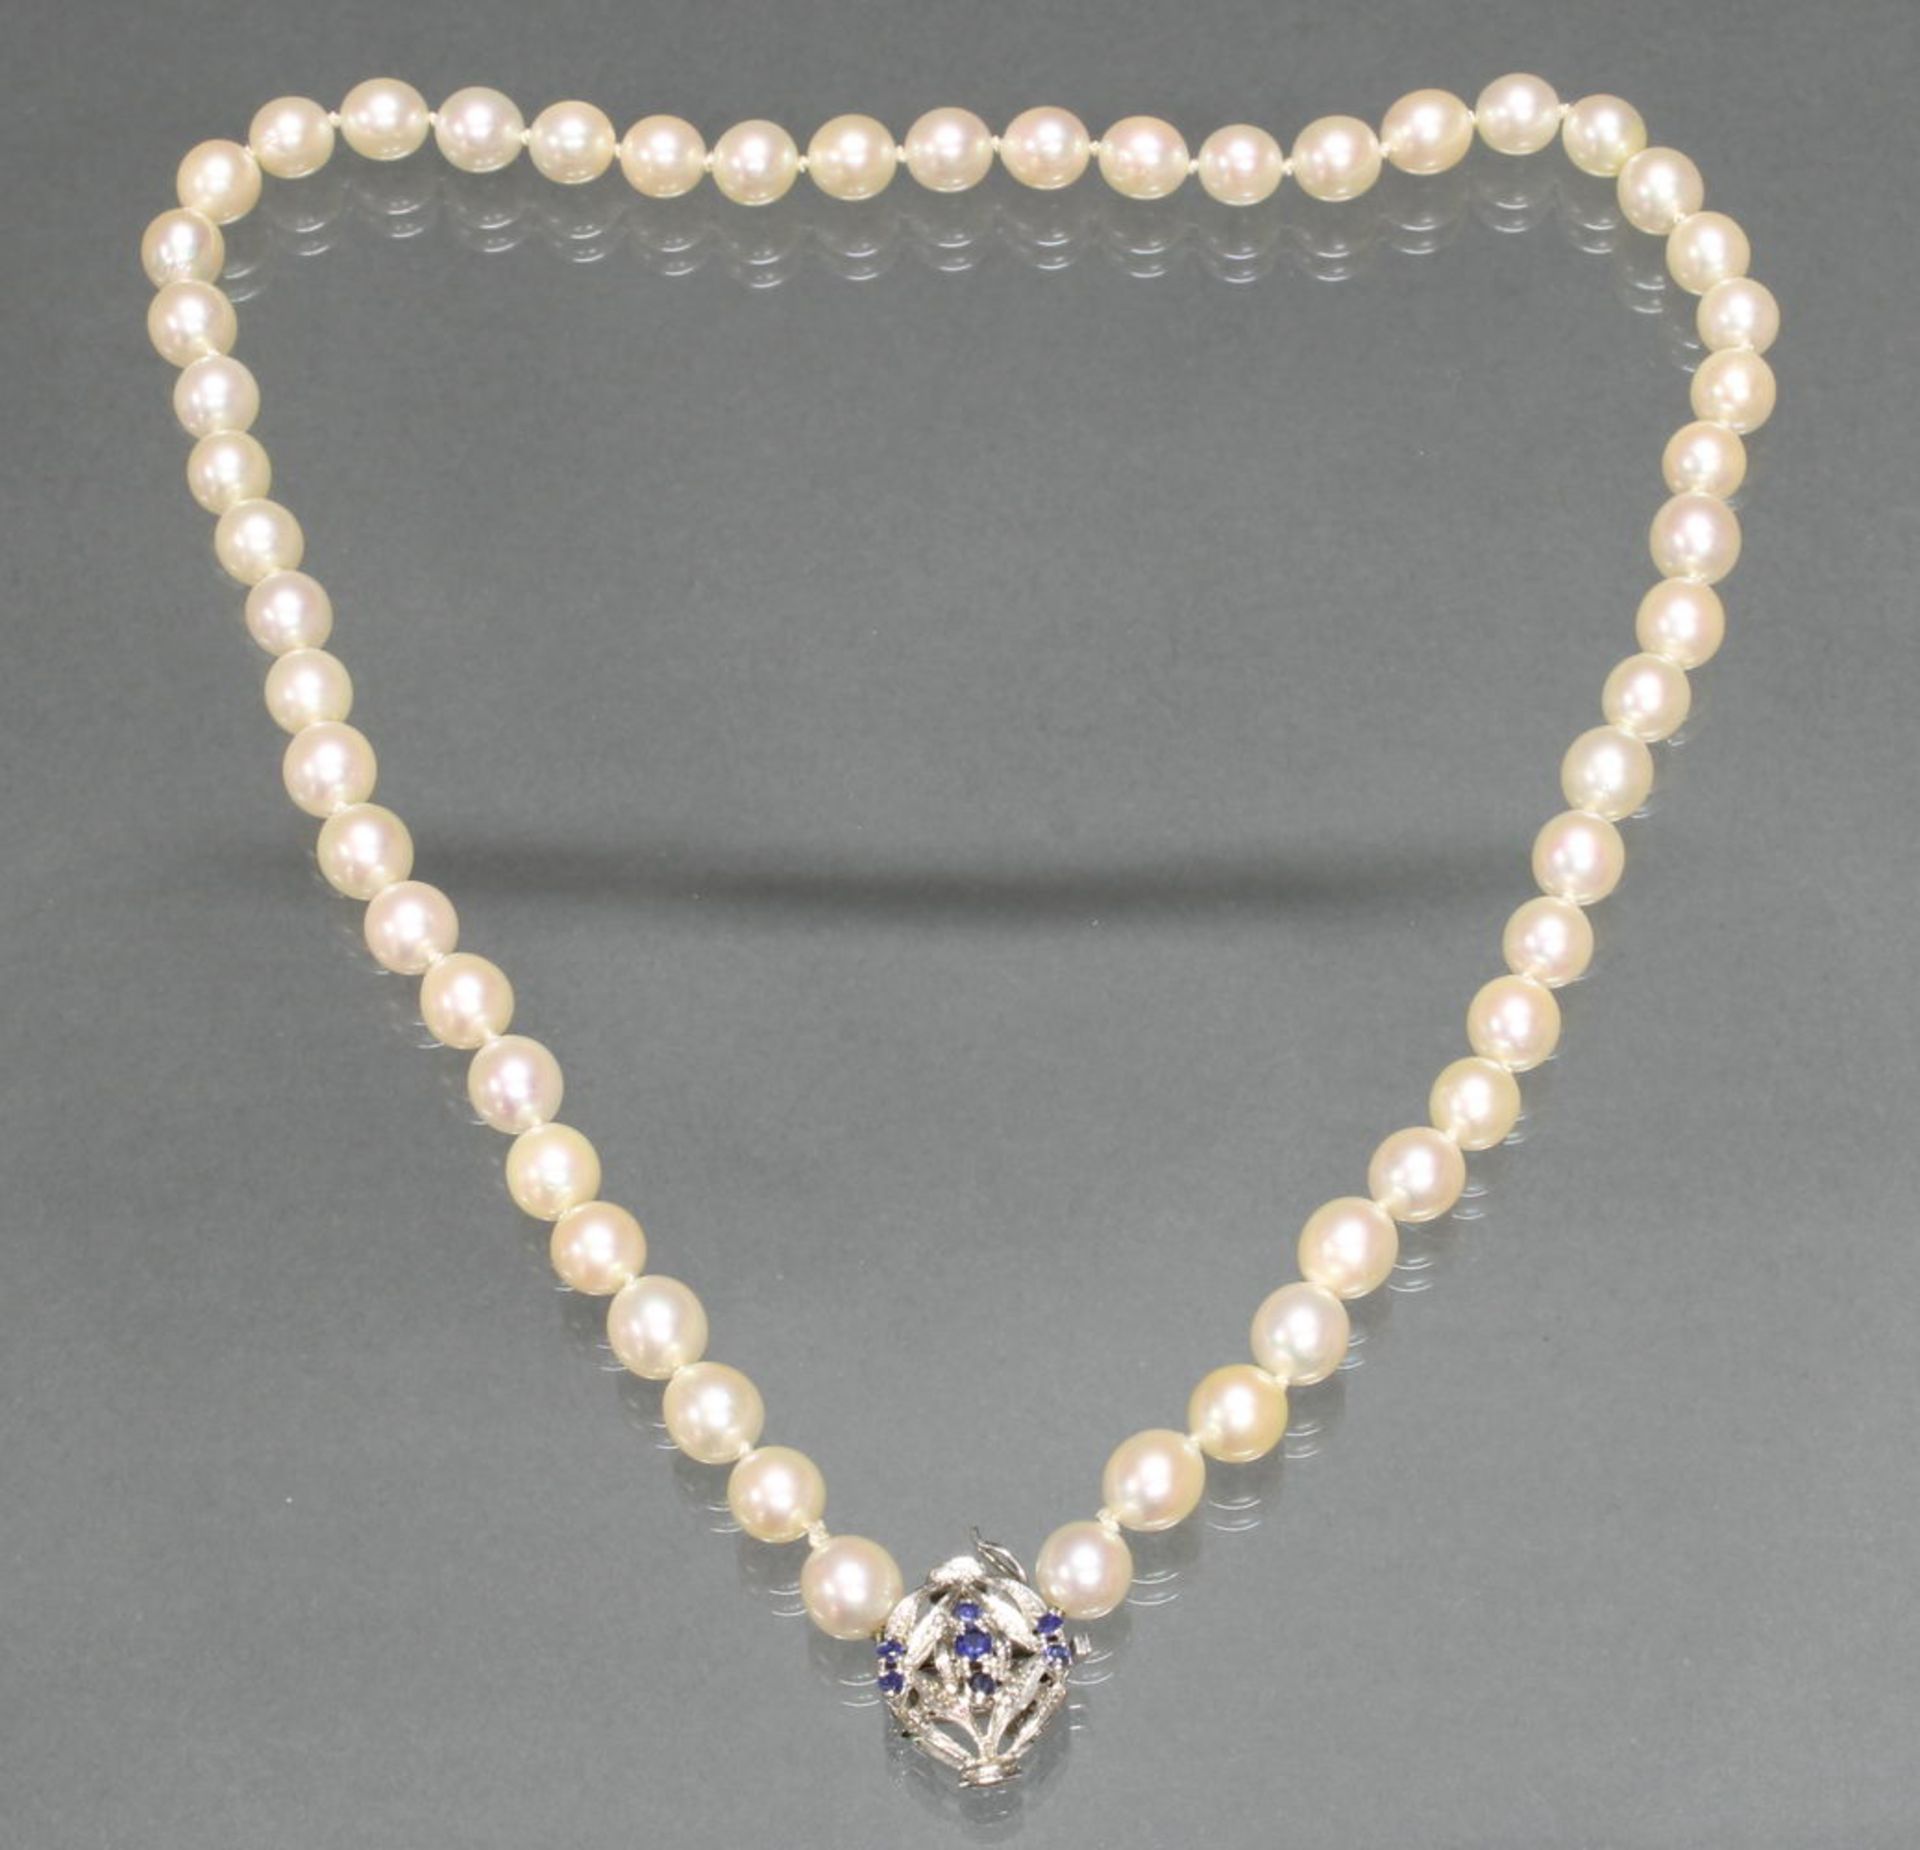 Perlenkette, 53 Akoya-Zuchtperlen ø ca. 7.5 mm, Schließe WG 750, 7 facettierte Saphire, 46 cm lan